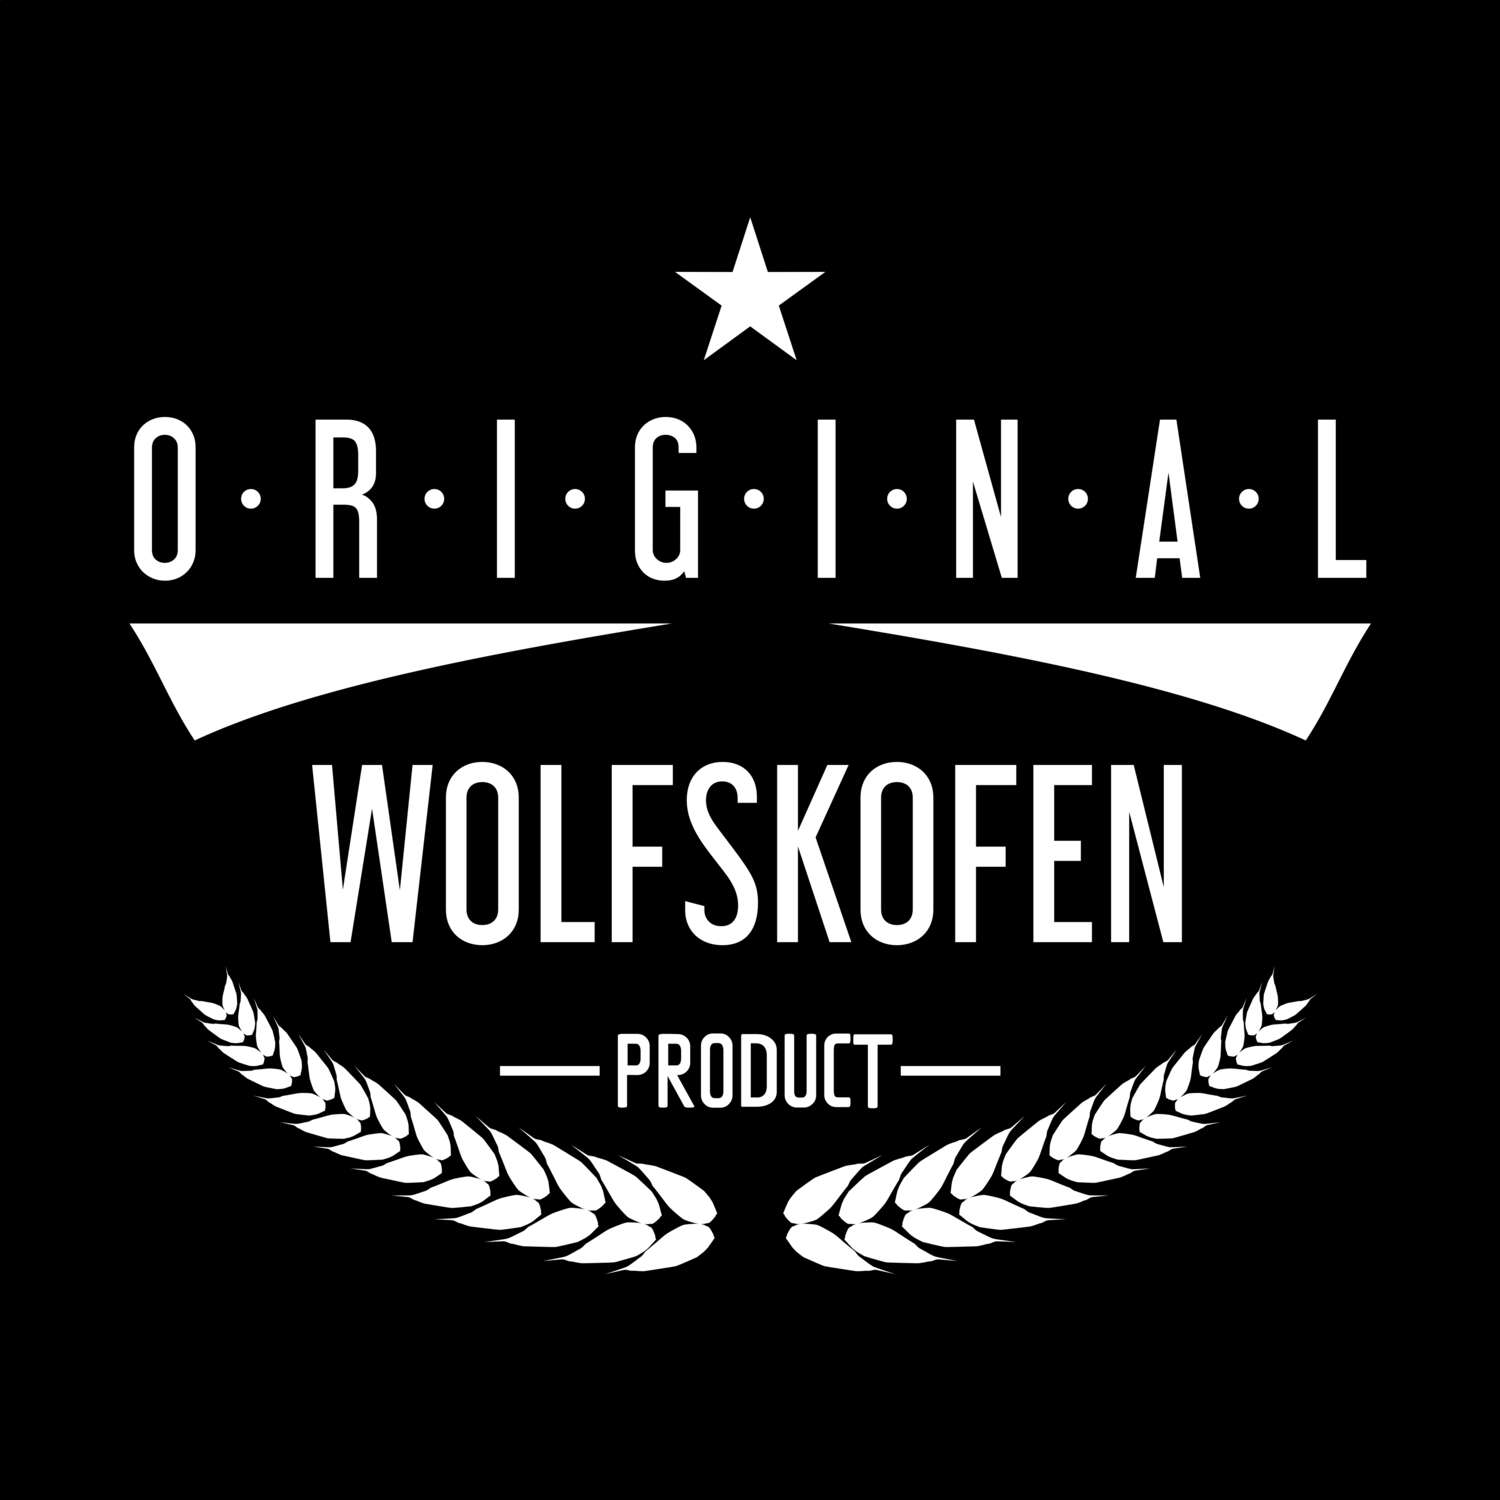 Wolfskofen T-Shirt »Original Product«